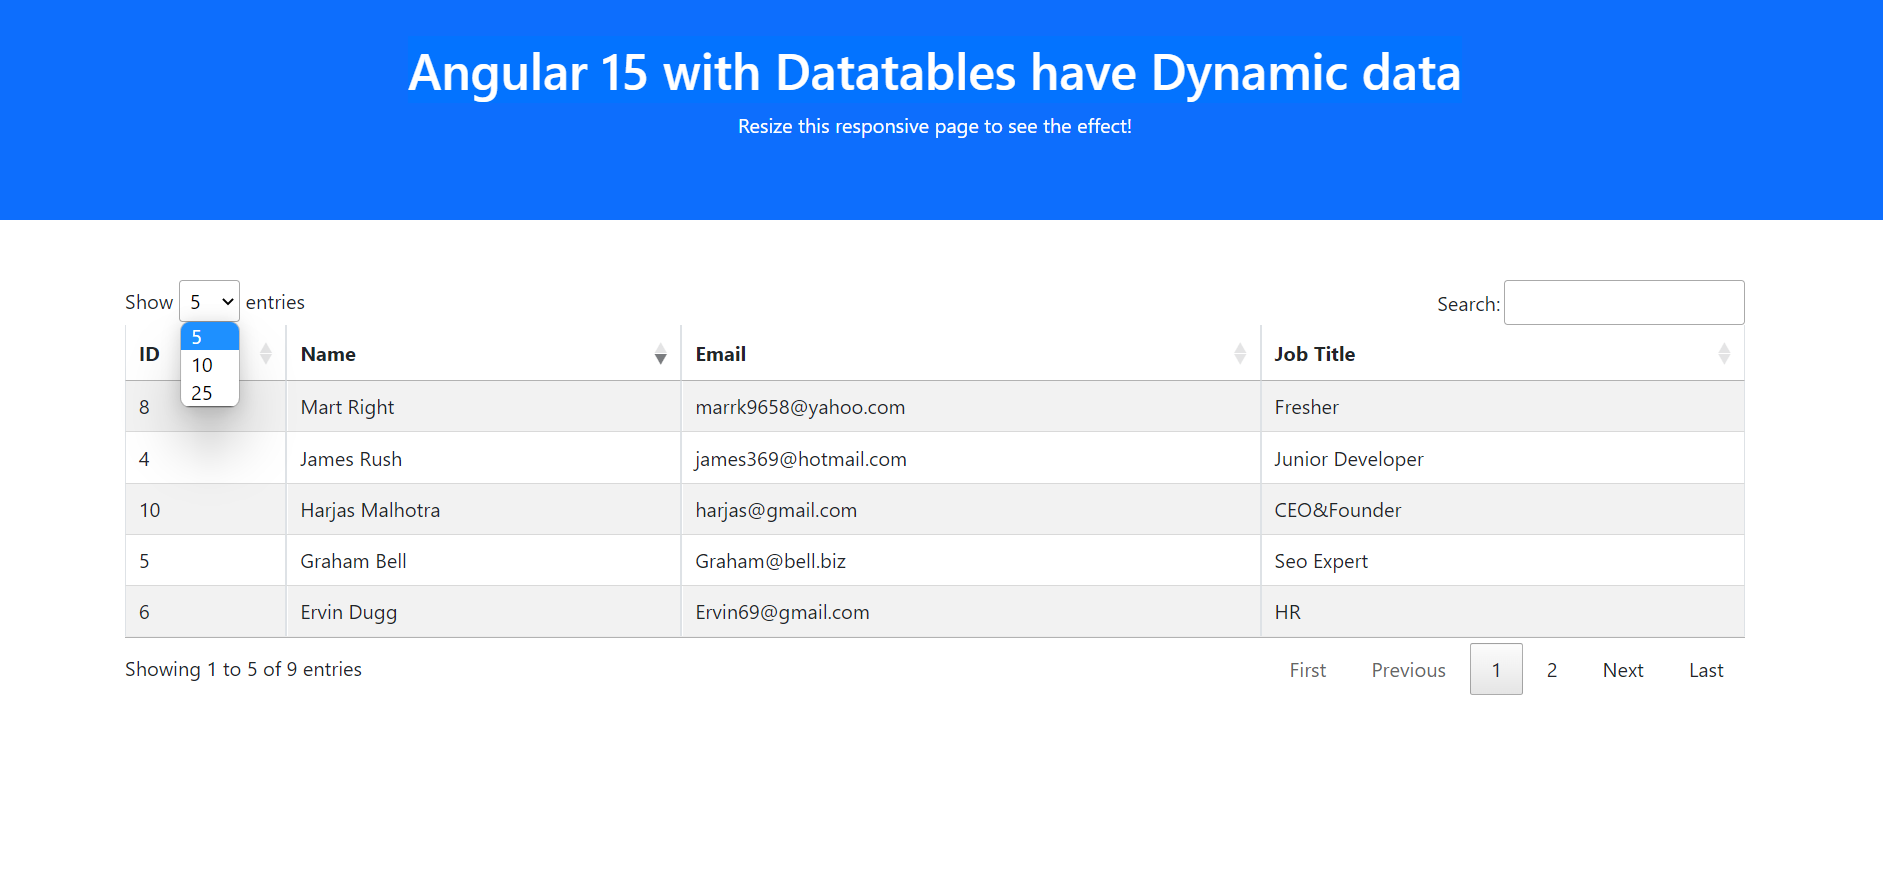 Angular 15 with Datatable having Dynamic data